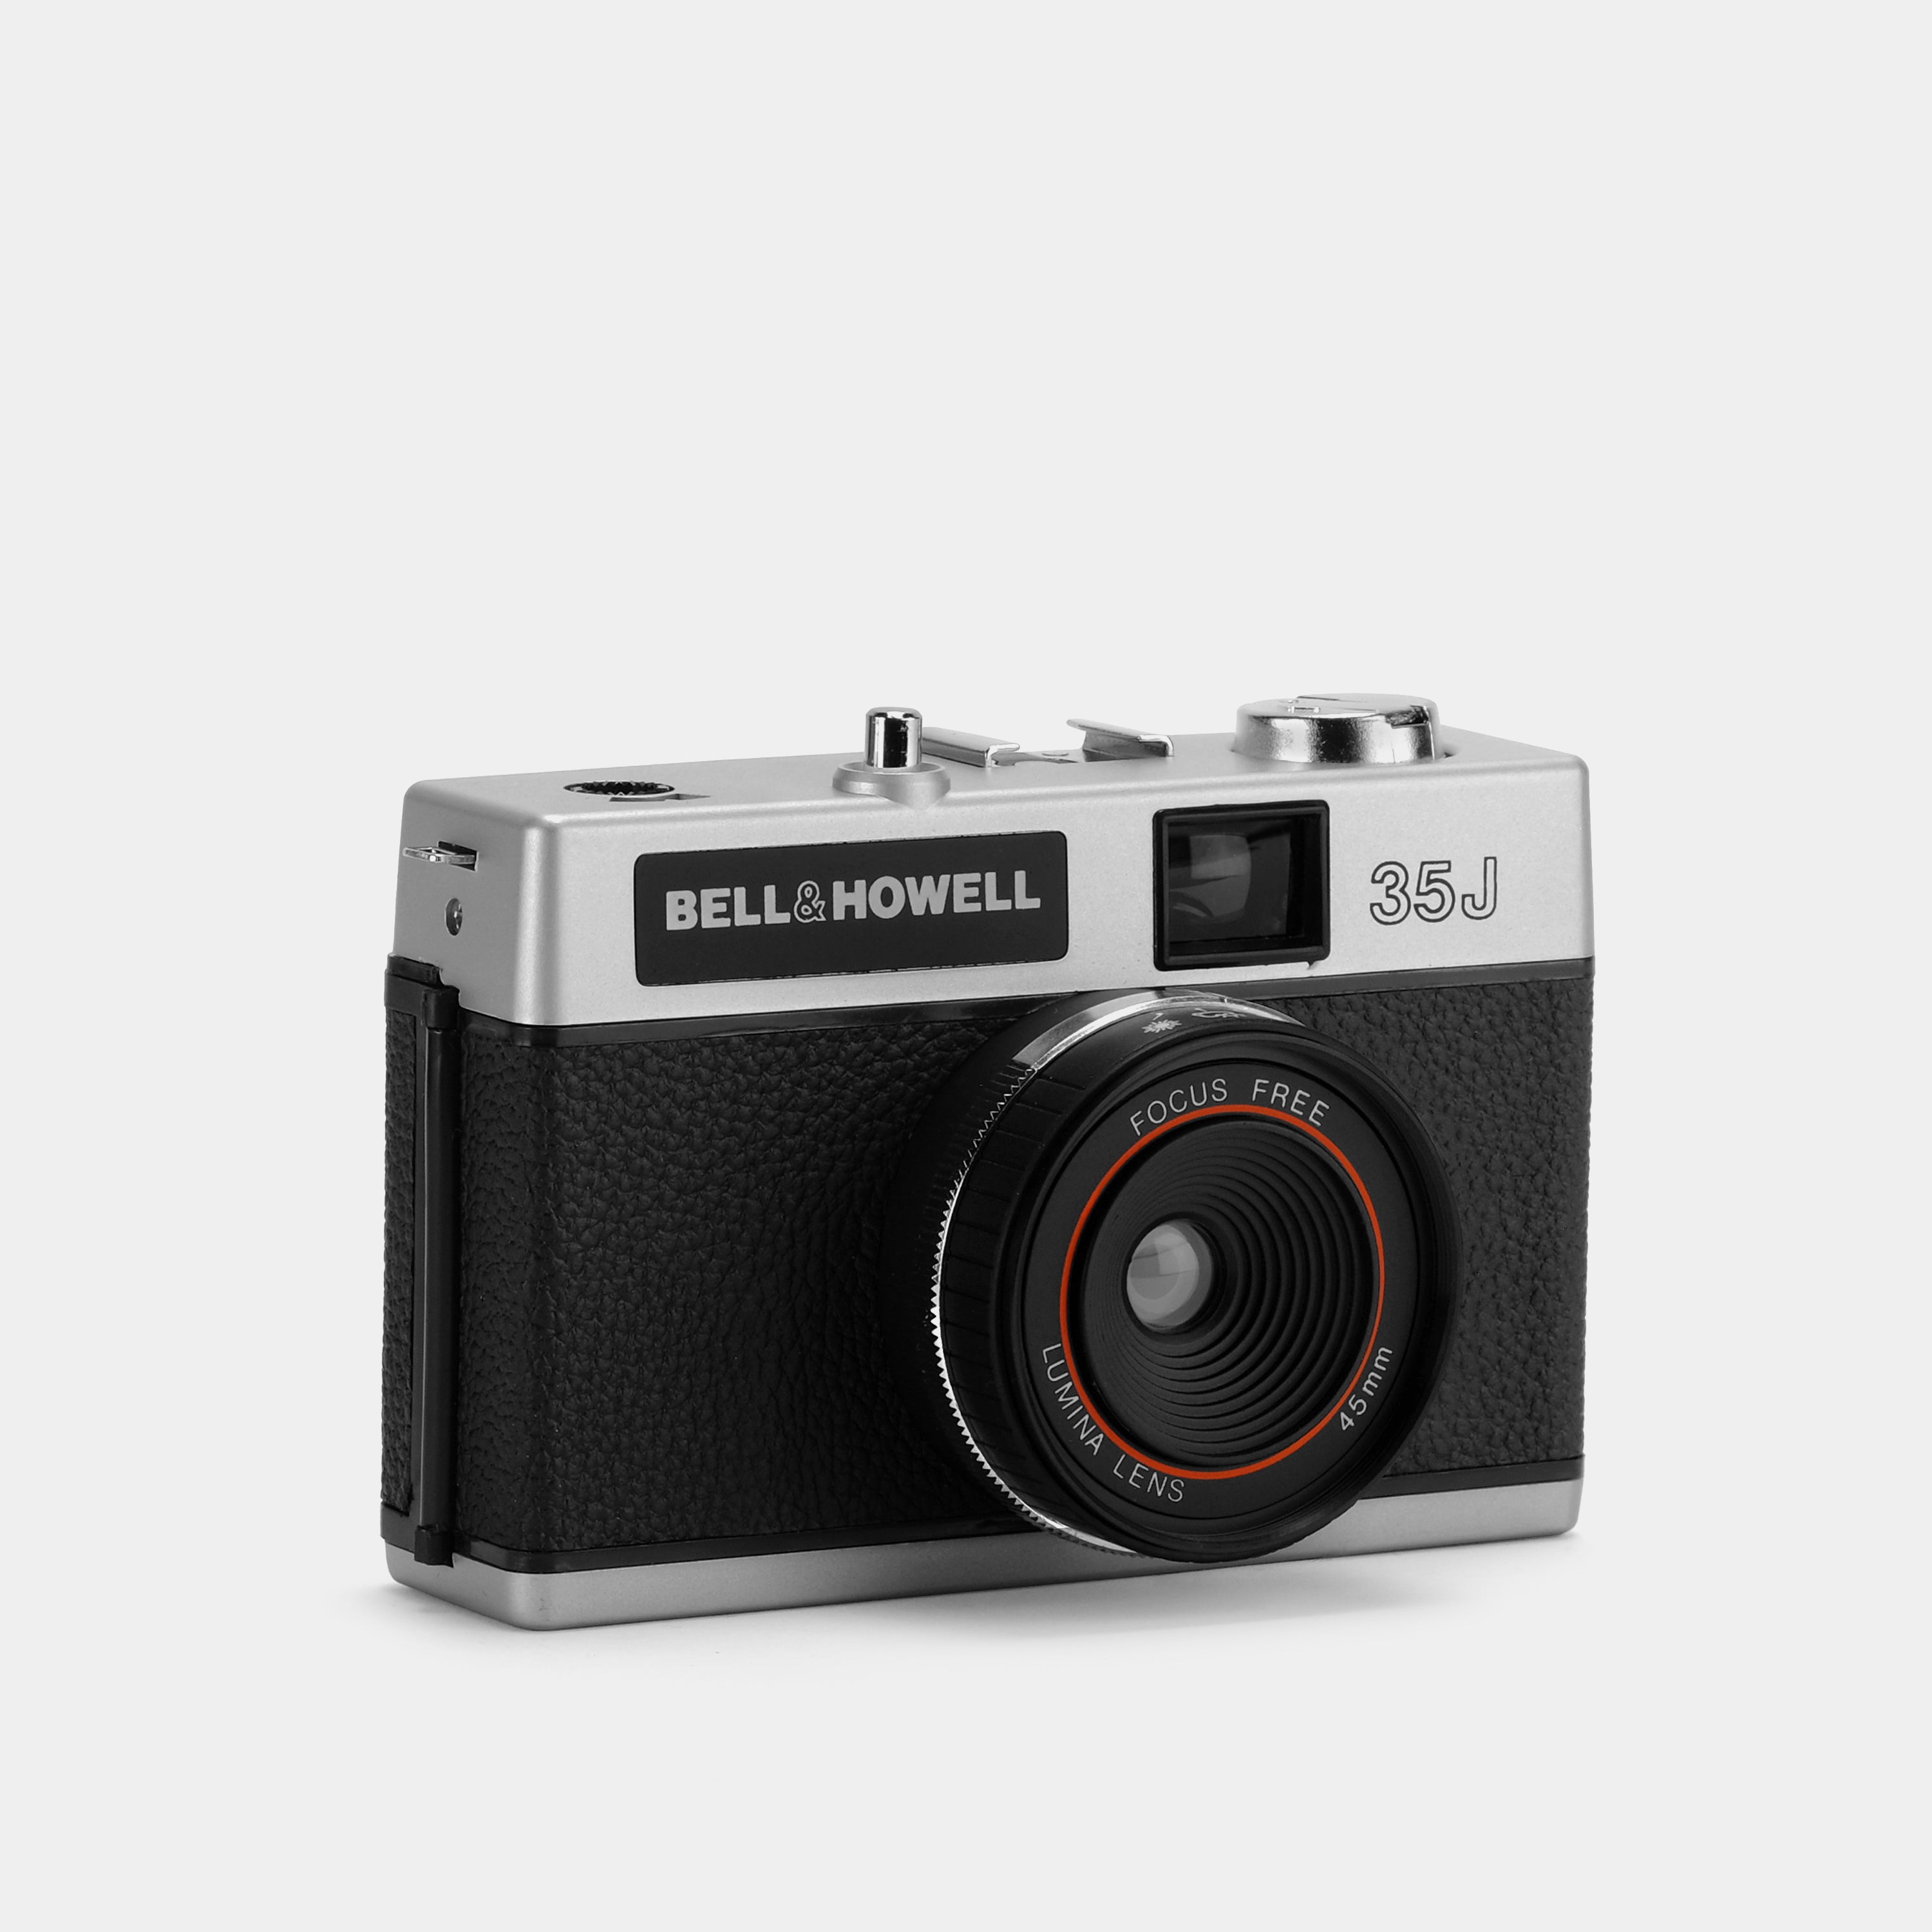 Bell & Howell 35J 35mm Film Camera